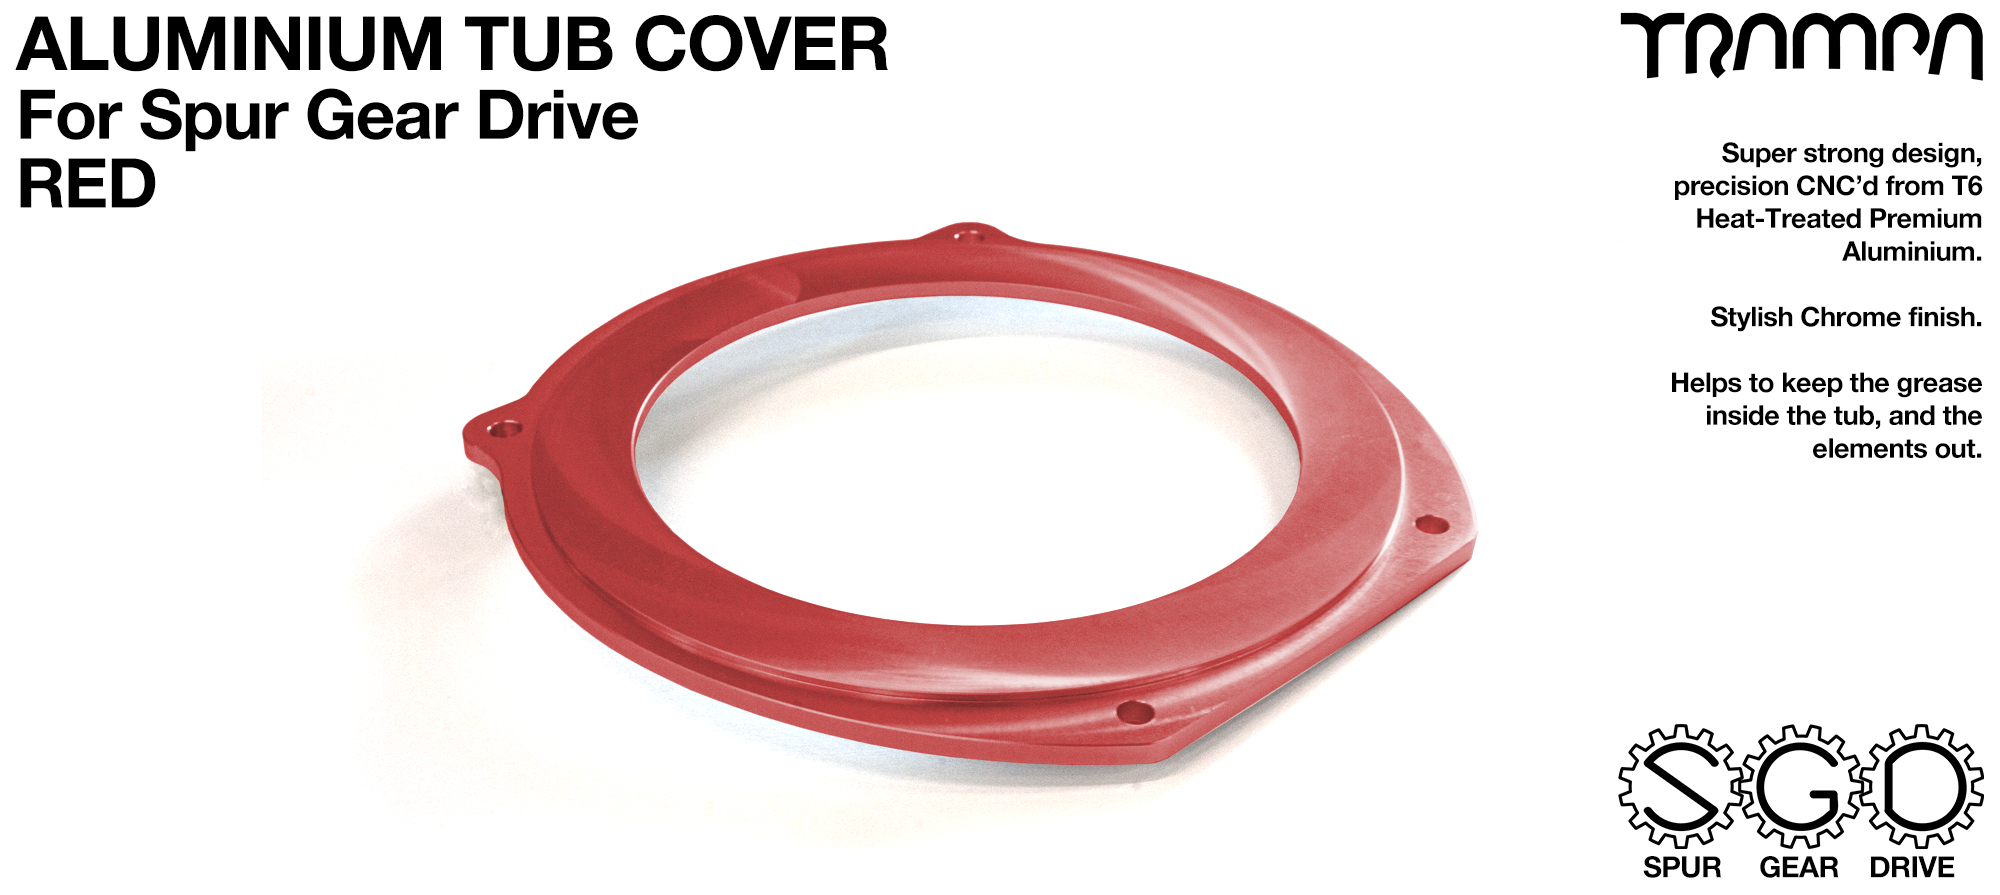 TRAMPA MKII Spur Gear Drive T6 Aluminium Tub Cover - RED